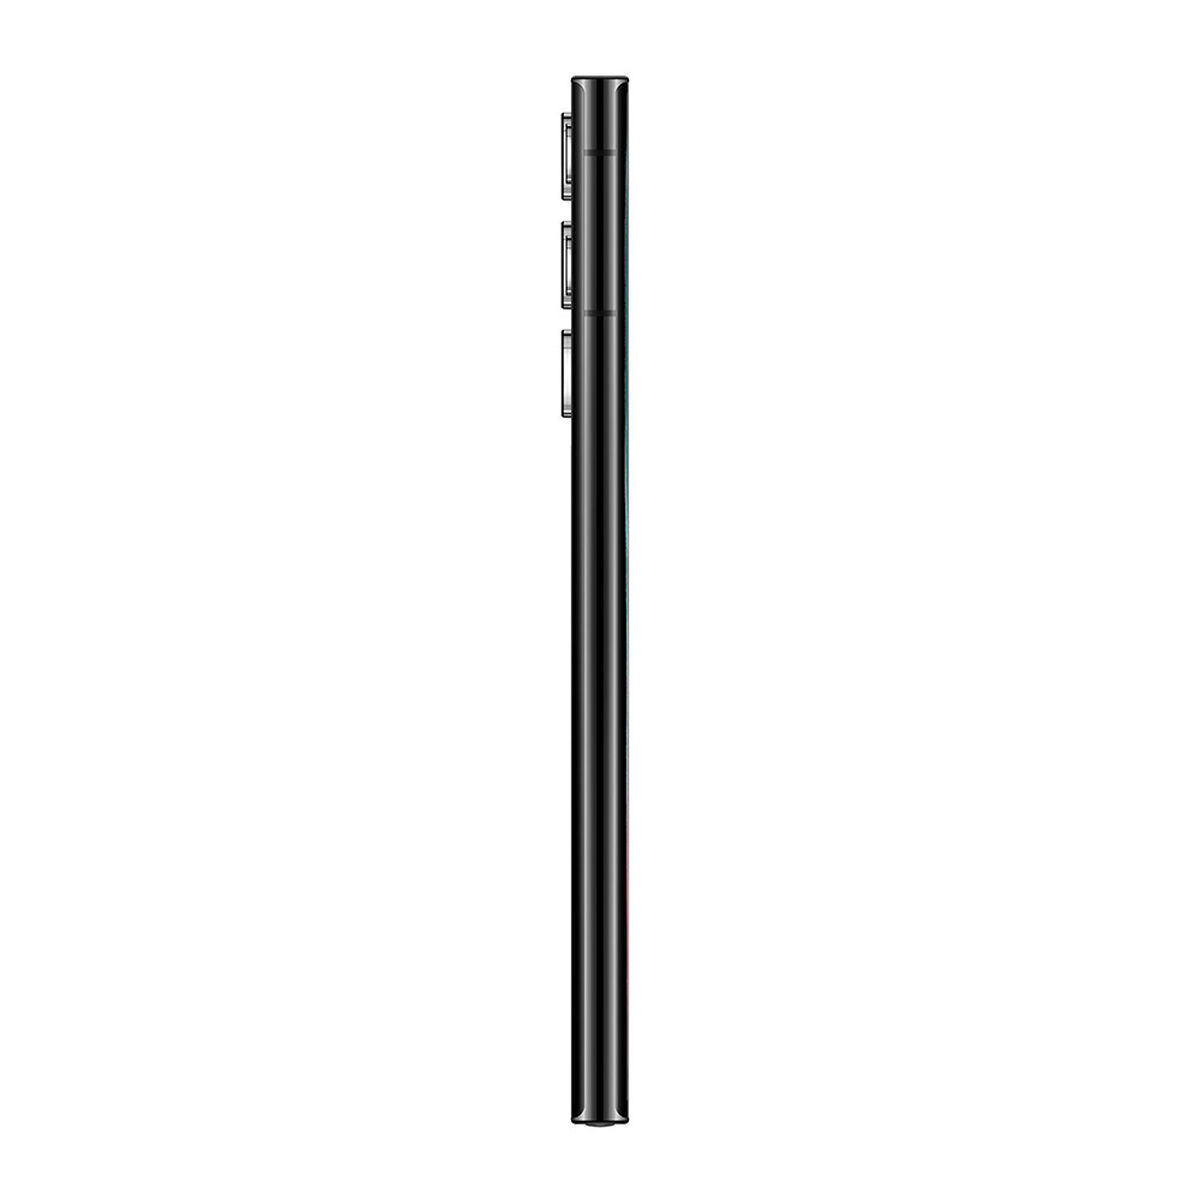 Celular Samsung Galaxy S22 Ultra 128GB 6,8" Phantom Black Liberado